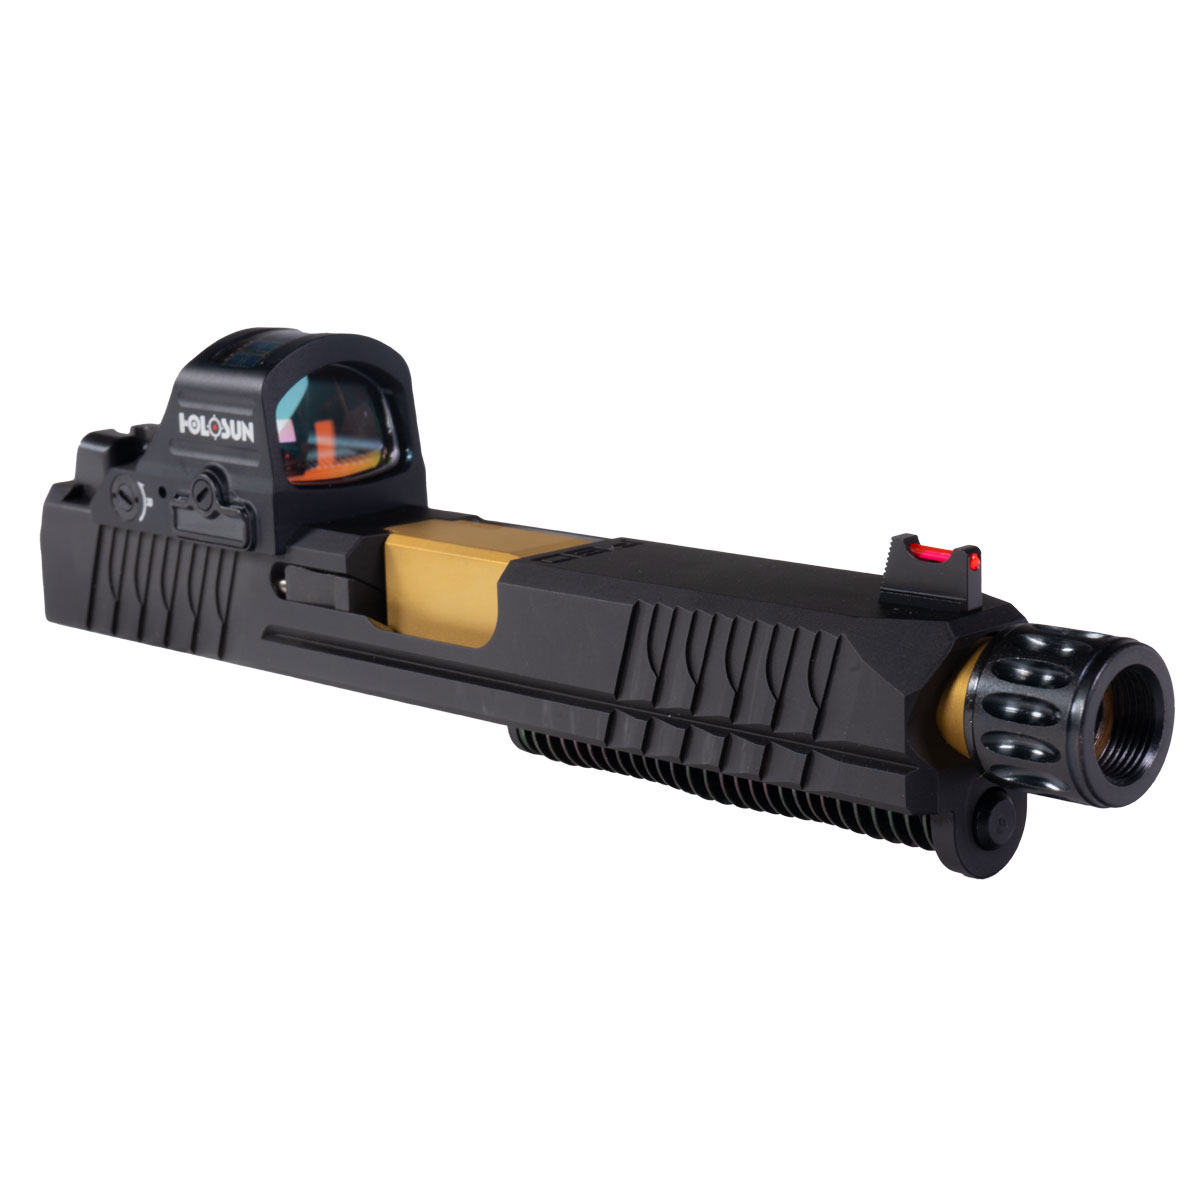 DTT 'Fiat Lux w/ HS507C-X2 Red Dot' 9mm Complete Slide Kit - Glock 19 Gen 1-3 Compatible